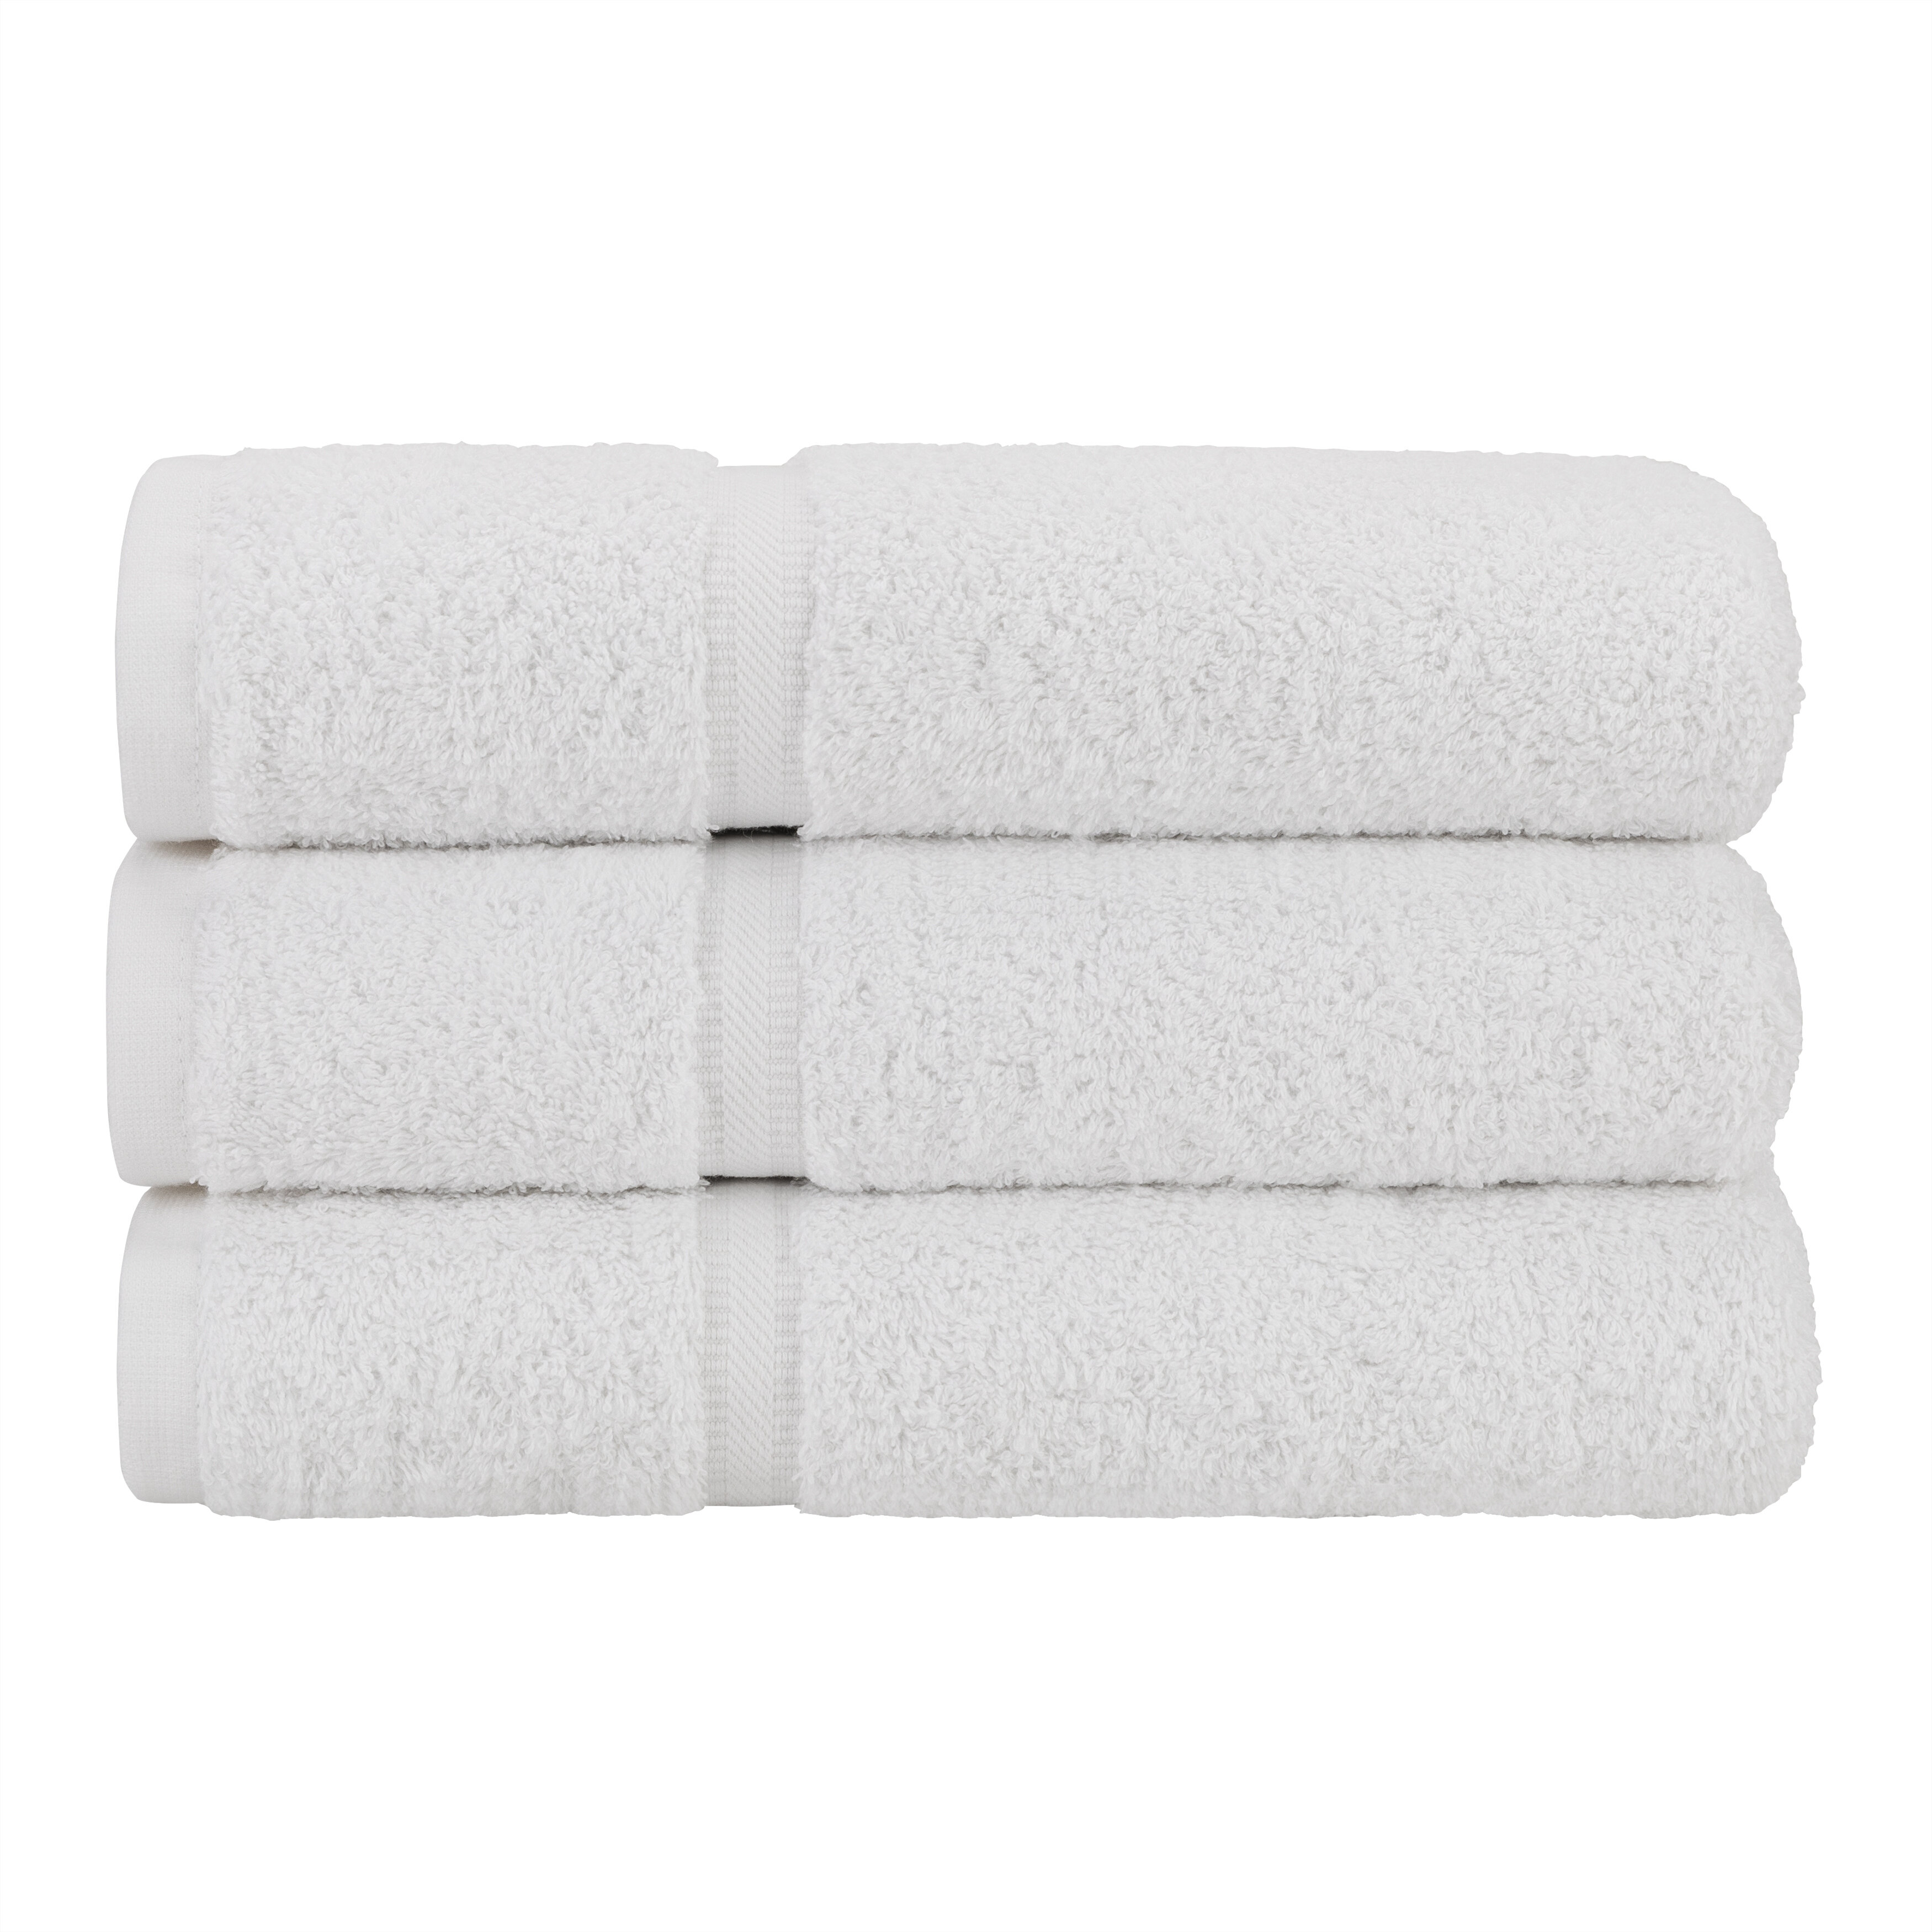 Sobel Westex Royal Cotton Bath Towels & Reviews - Wayfair Canada